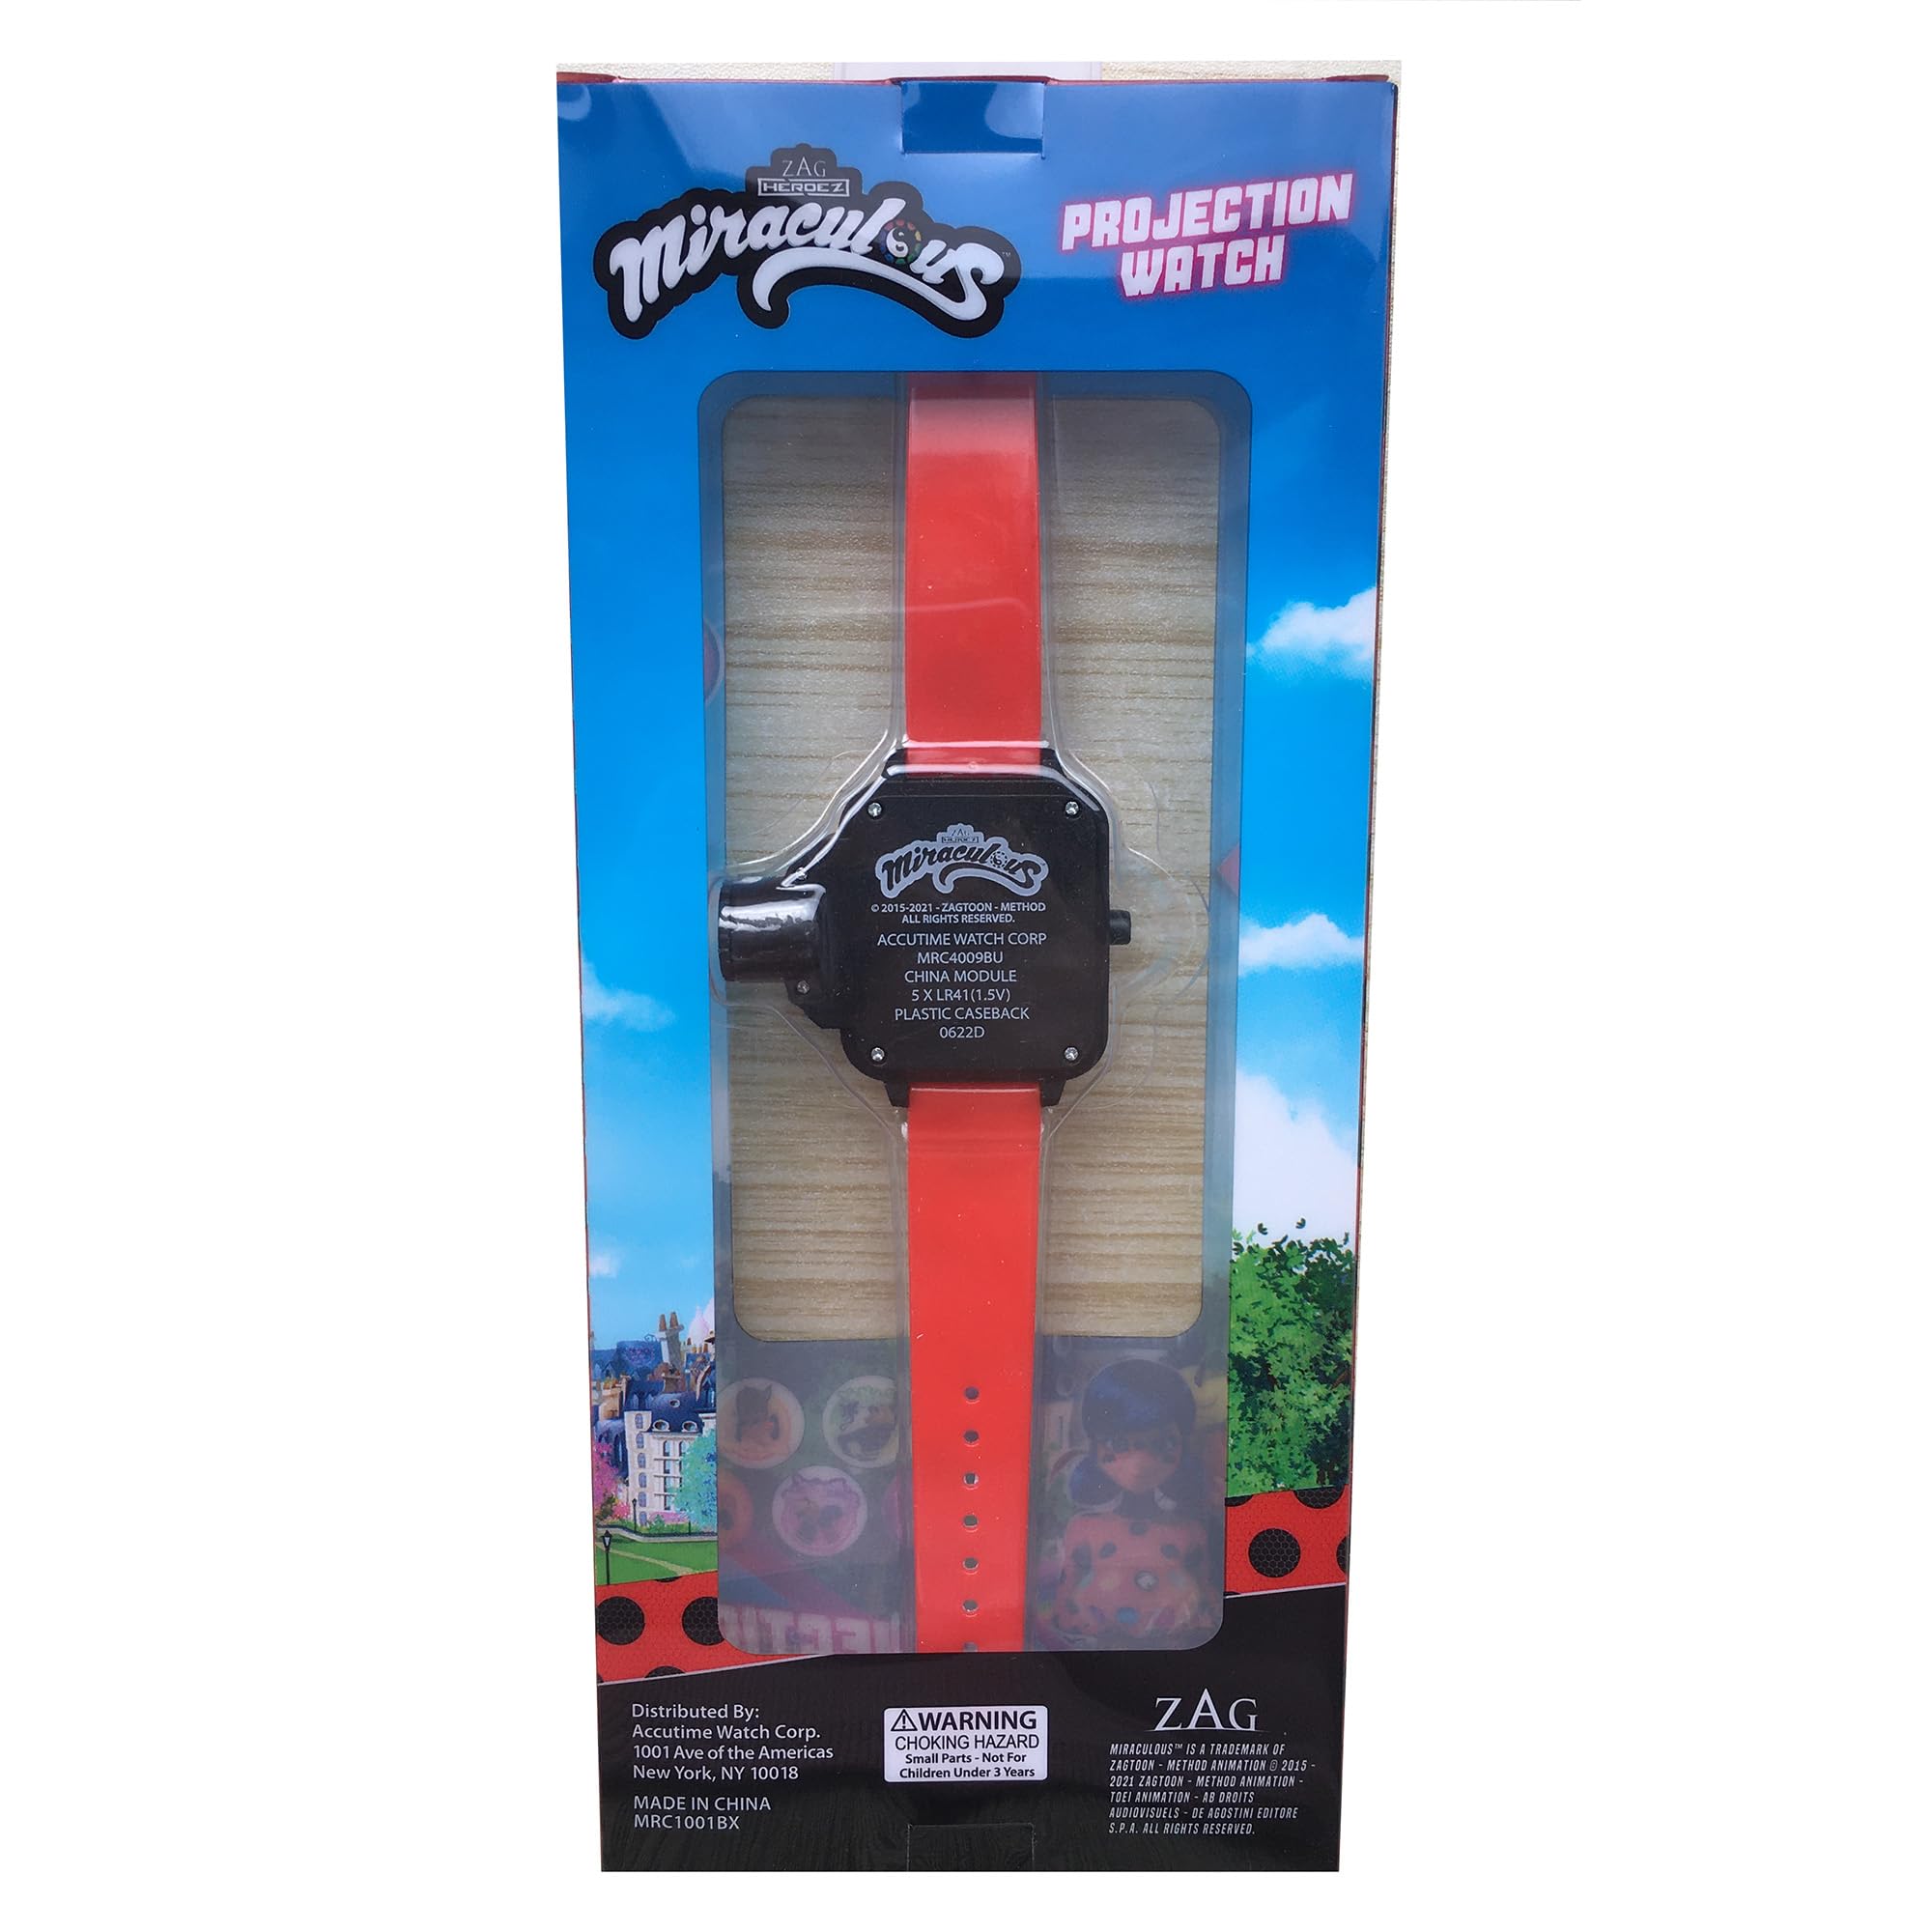 Accutime Kids Miraculous Ladybug Digital Flashing LCD Quartz Childrens Wrist Watch for Boys, Girls, Toddlers with Red Strap (Model: MRC4009AZ)